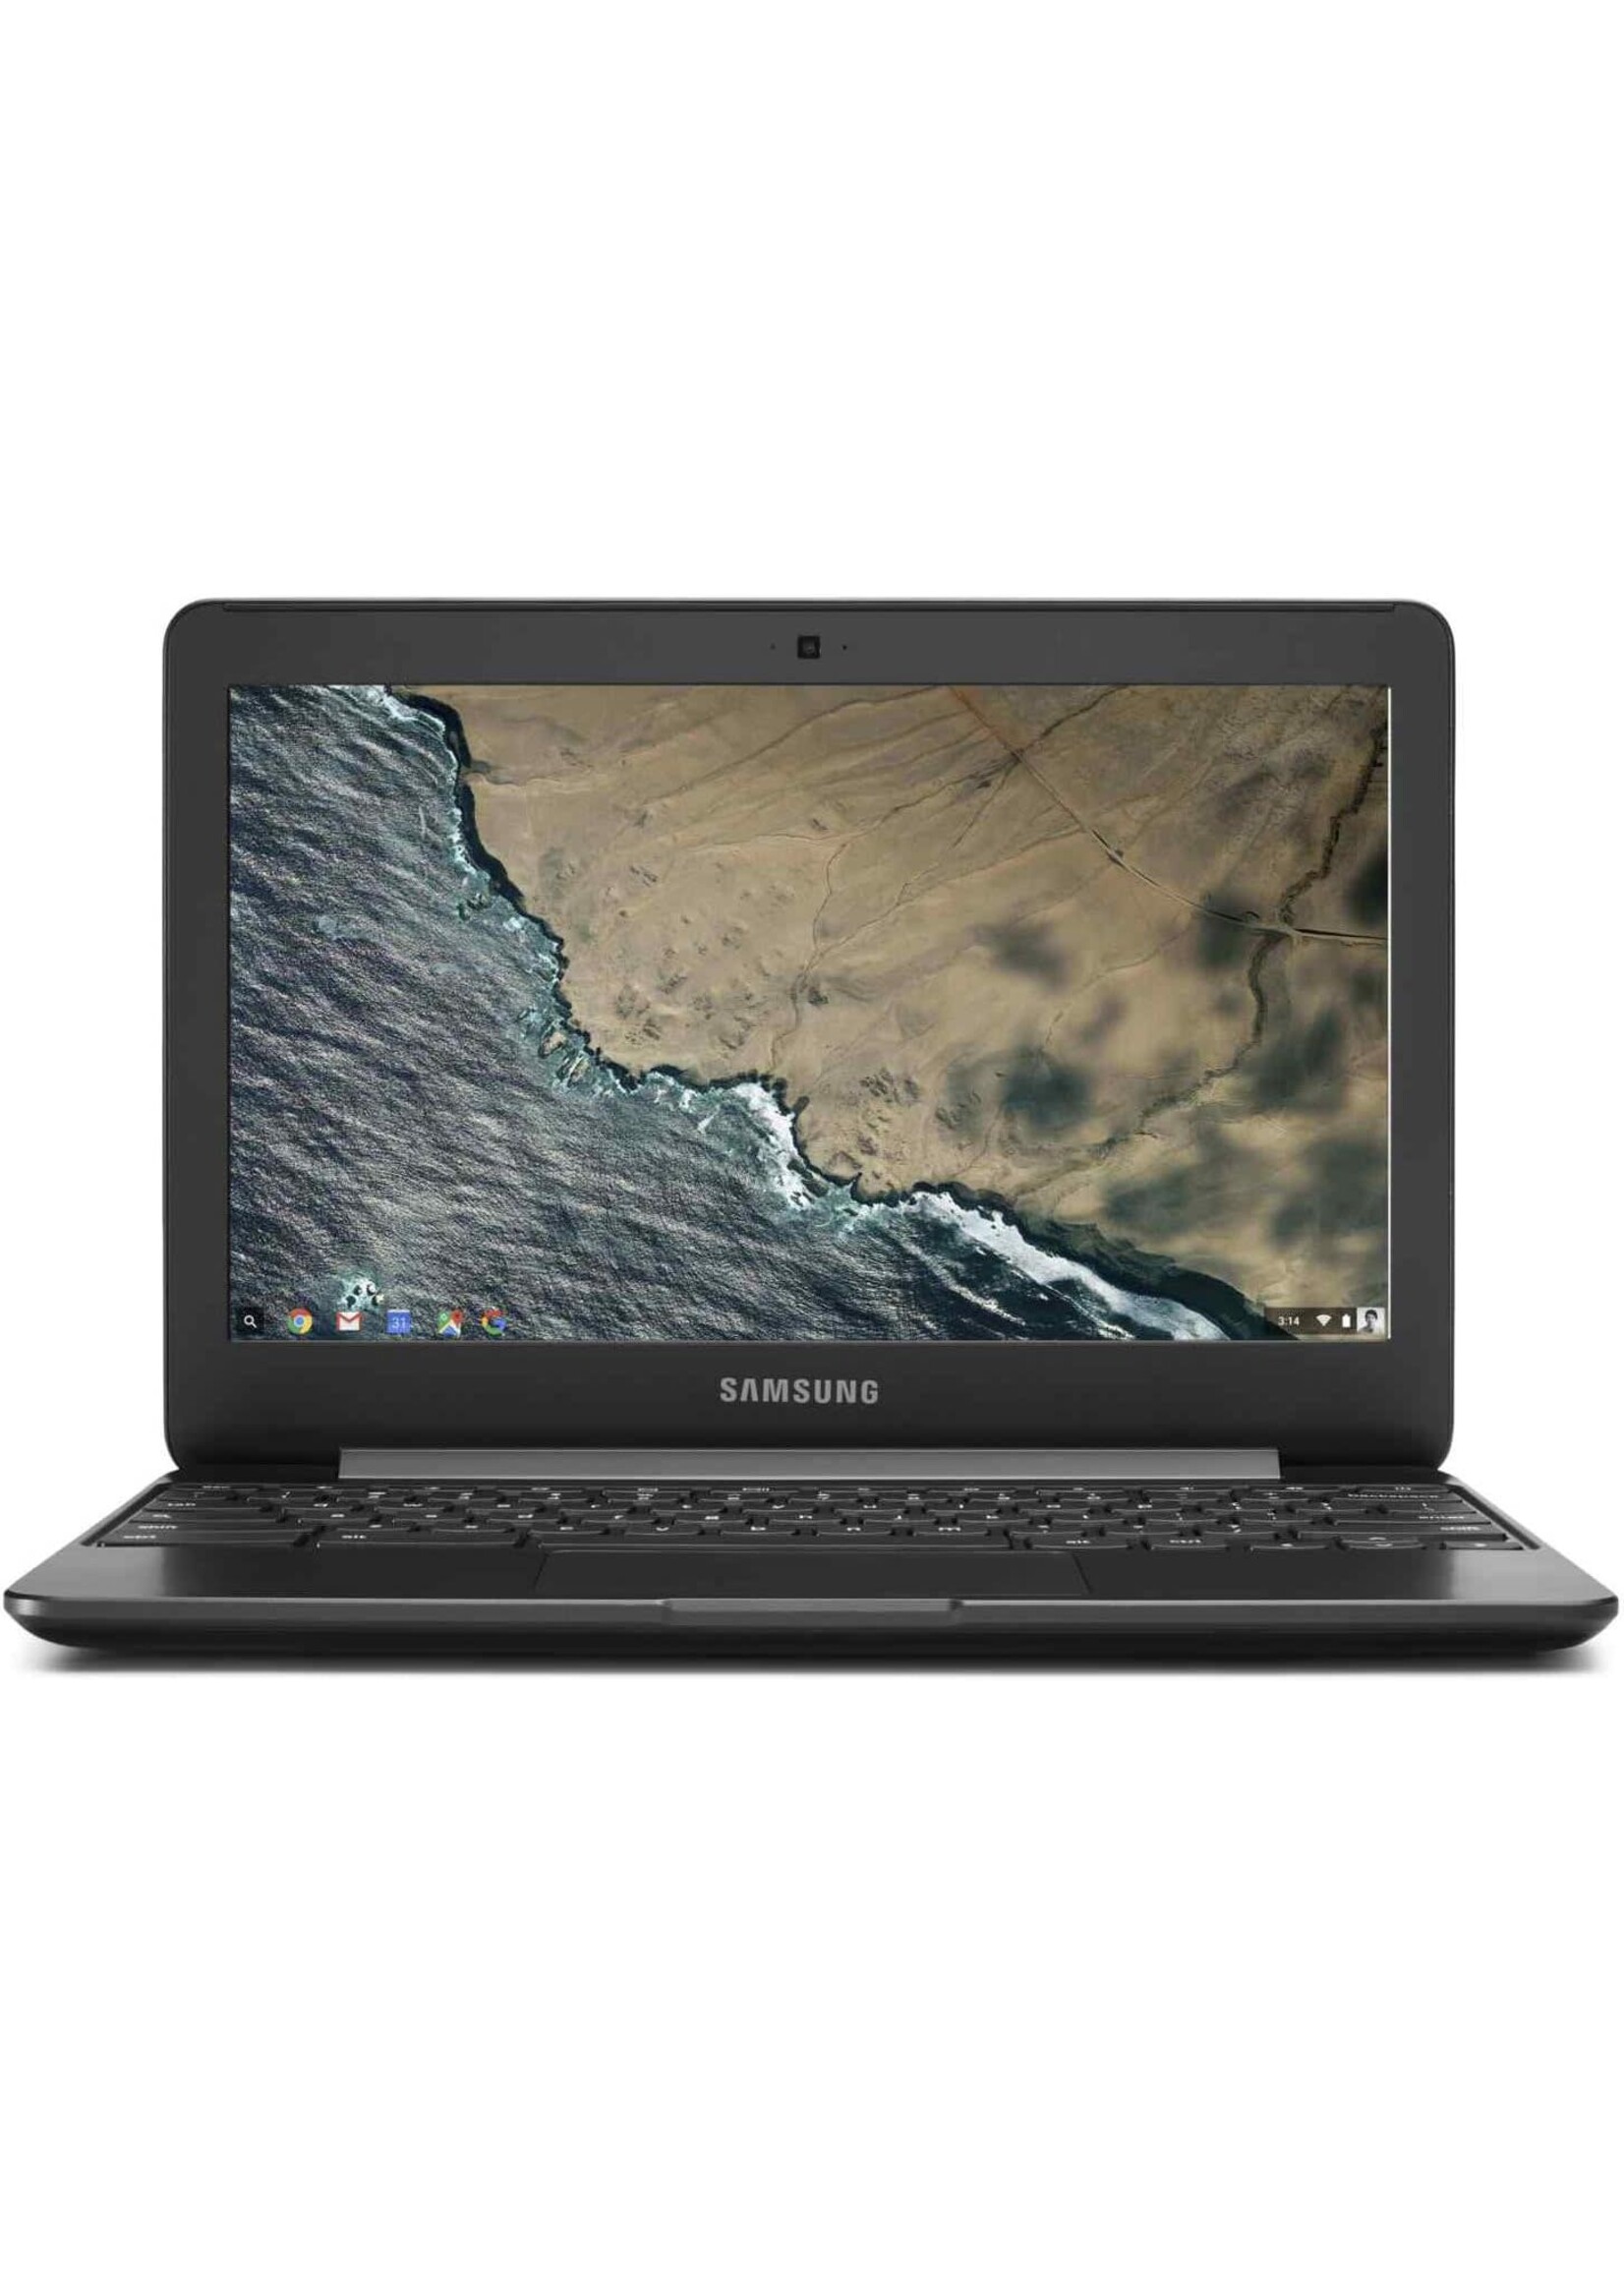 samsung Samsung Chromebook 3 XE500C13-K02US 4 GB RAM 16GB eMMC 11.6 Inch Laptop (Black)